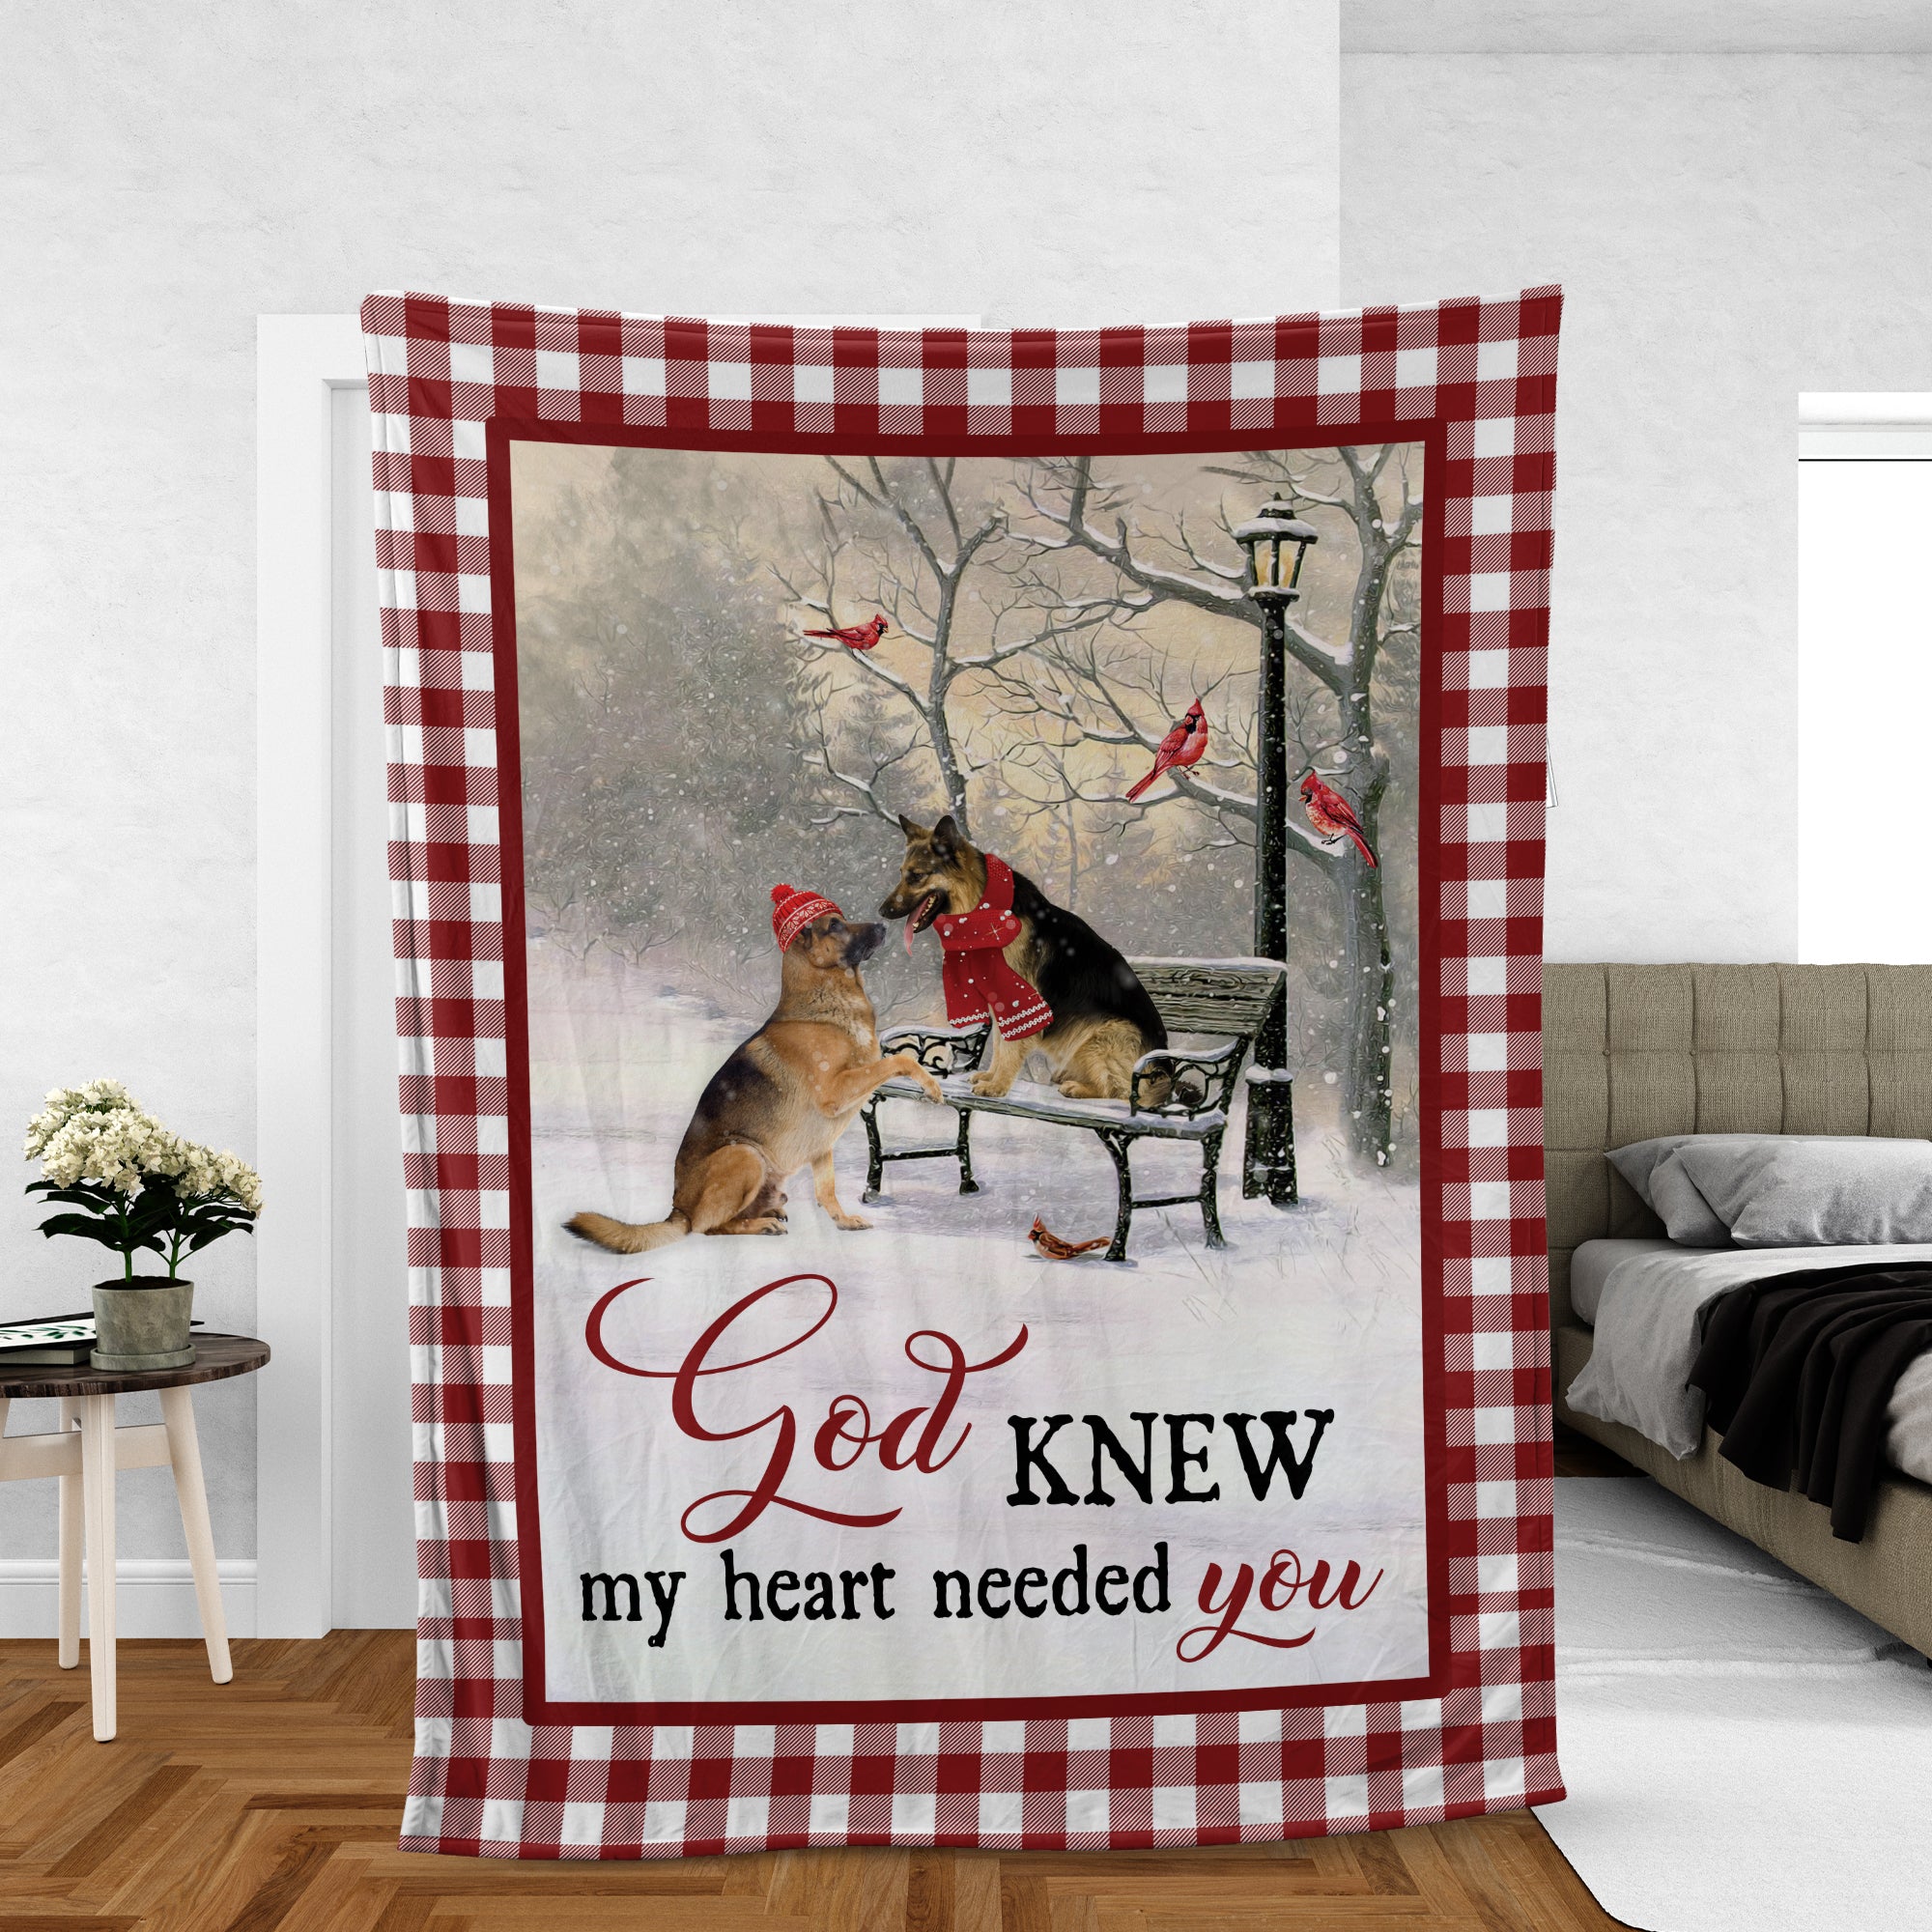 German Shepherd Blanket, God Blanket, German Shepherd Winter Blanket, Christmas Blanket, Inspirational Gift - God Knew My Heart Need You